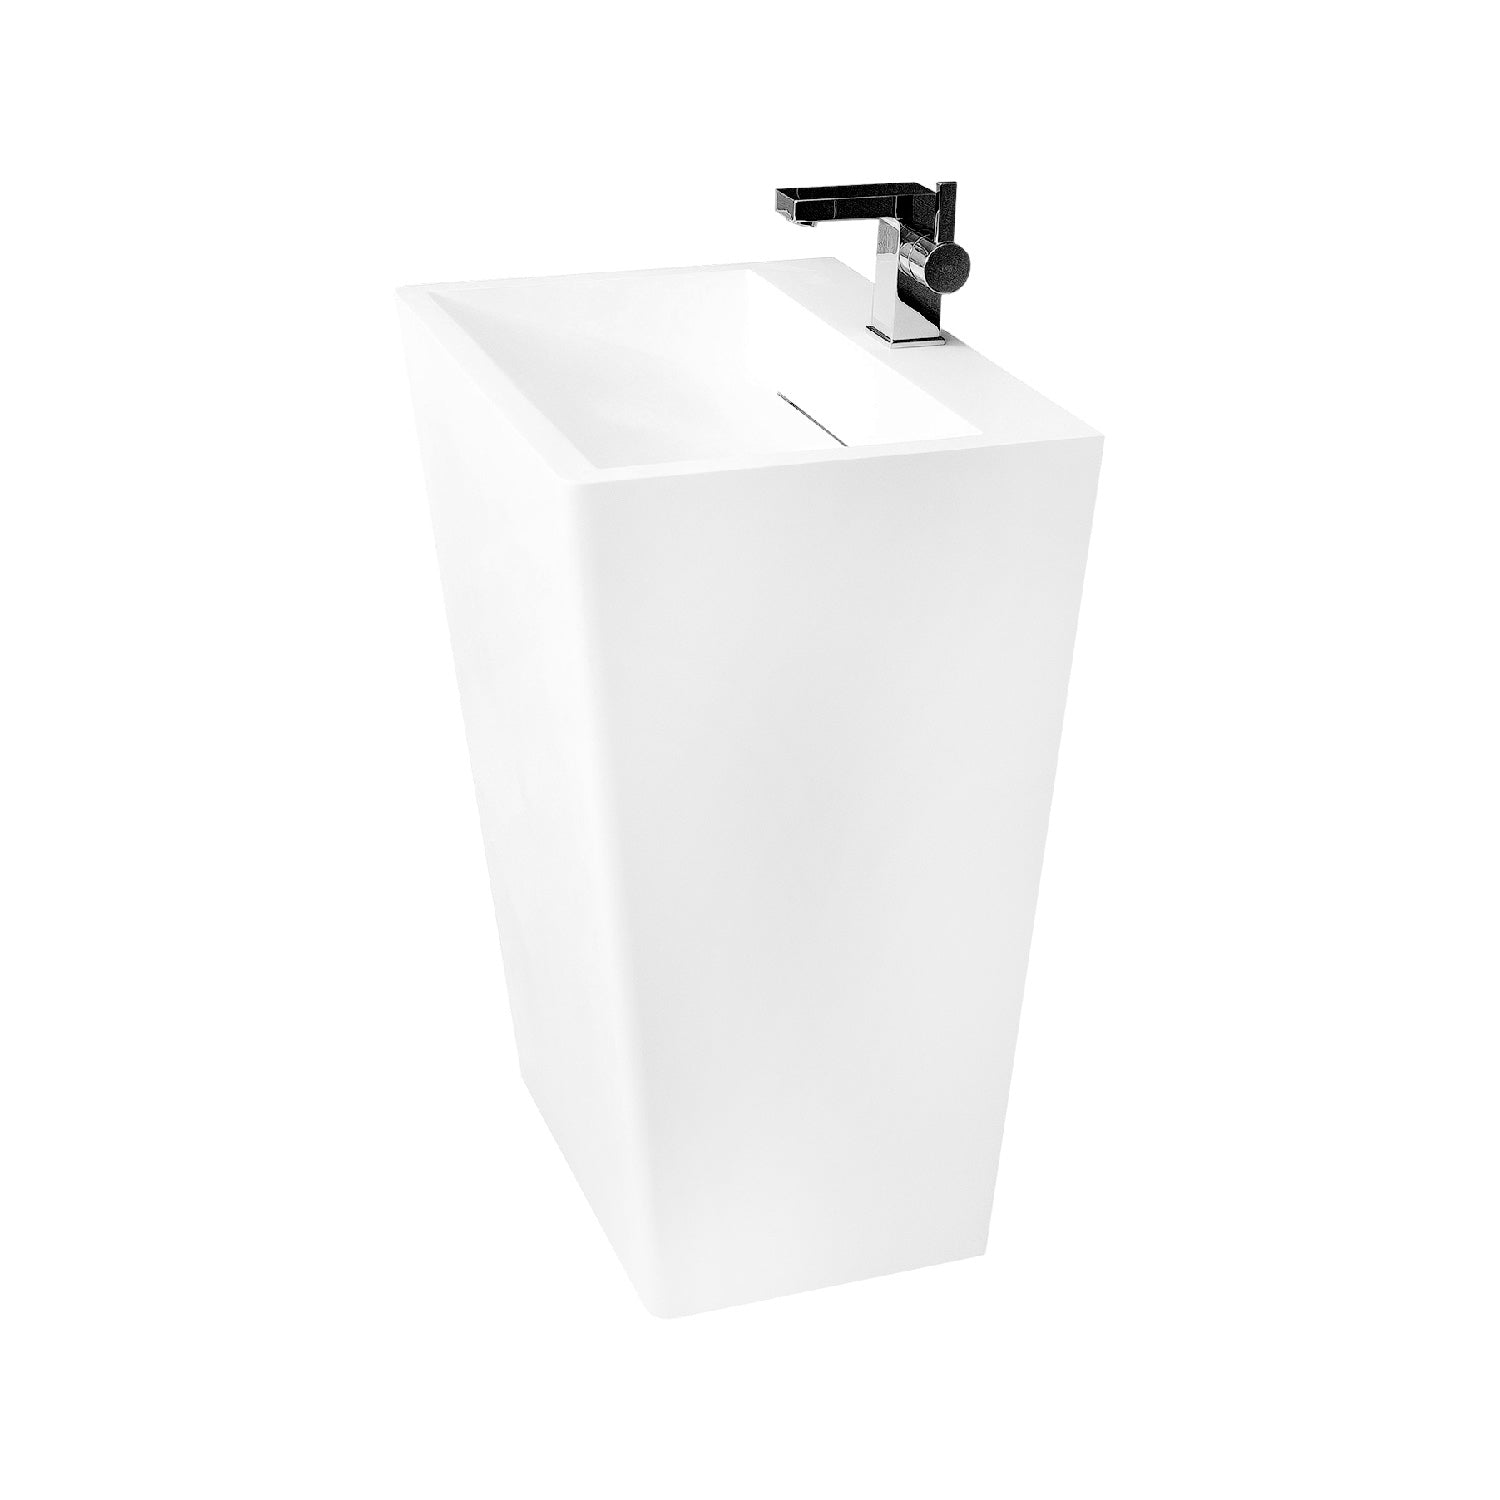 DAX Solid Surface Rectangle Pedestal Freestanding Bathroom Sink, White